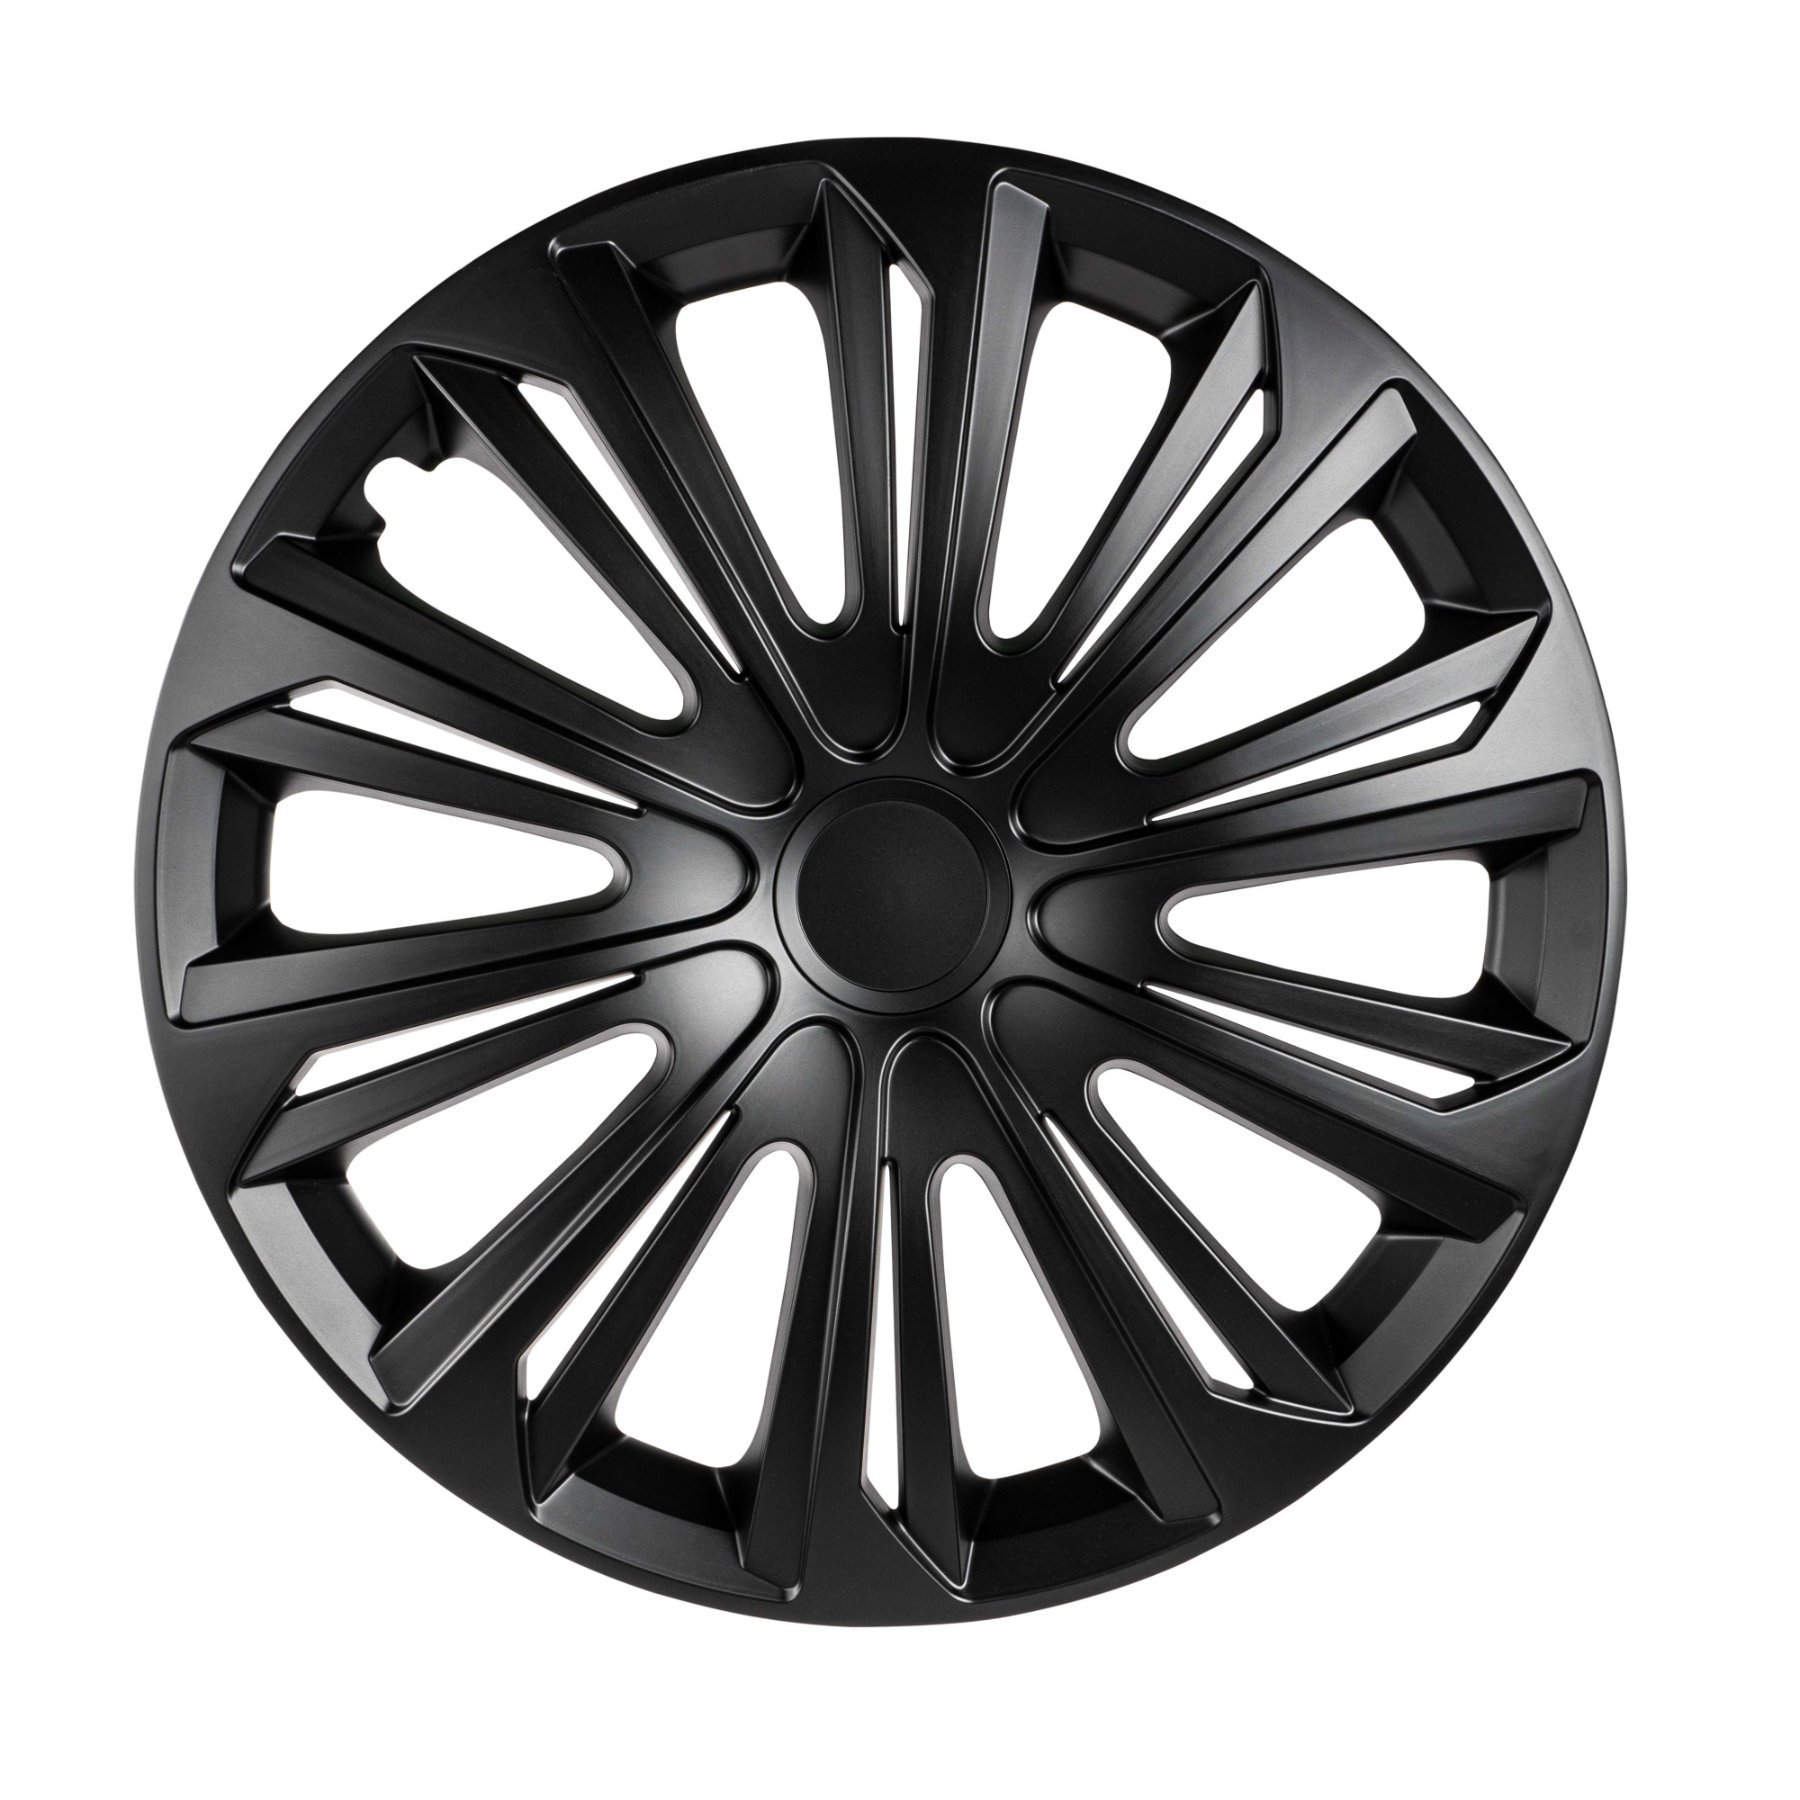 Wheel covers Racer 14", 4 piece black